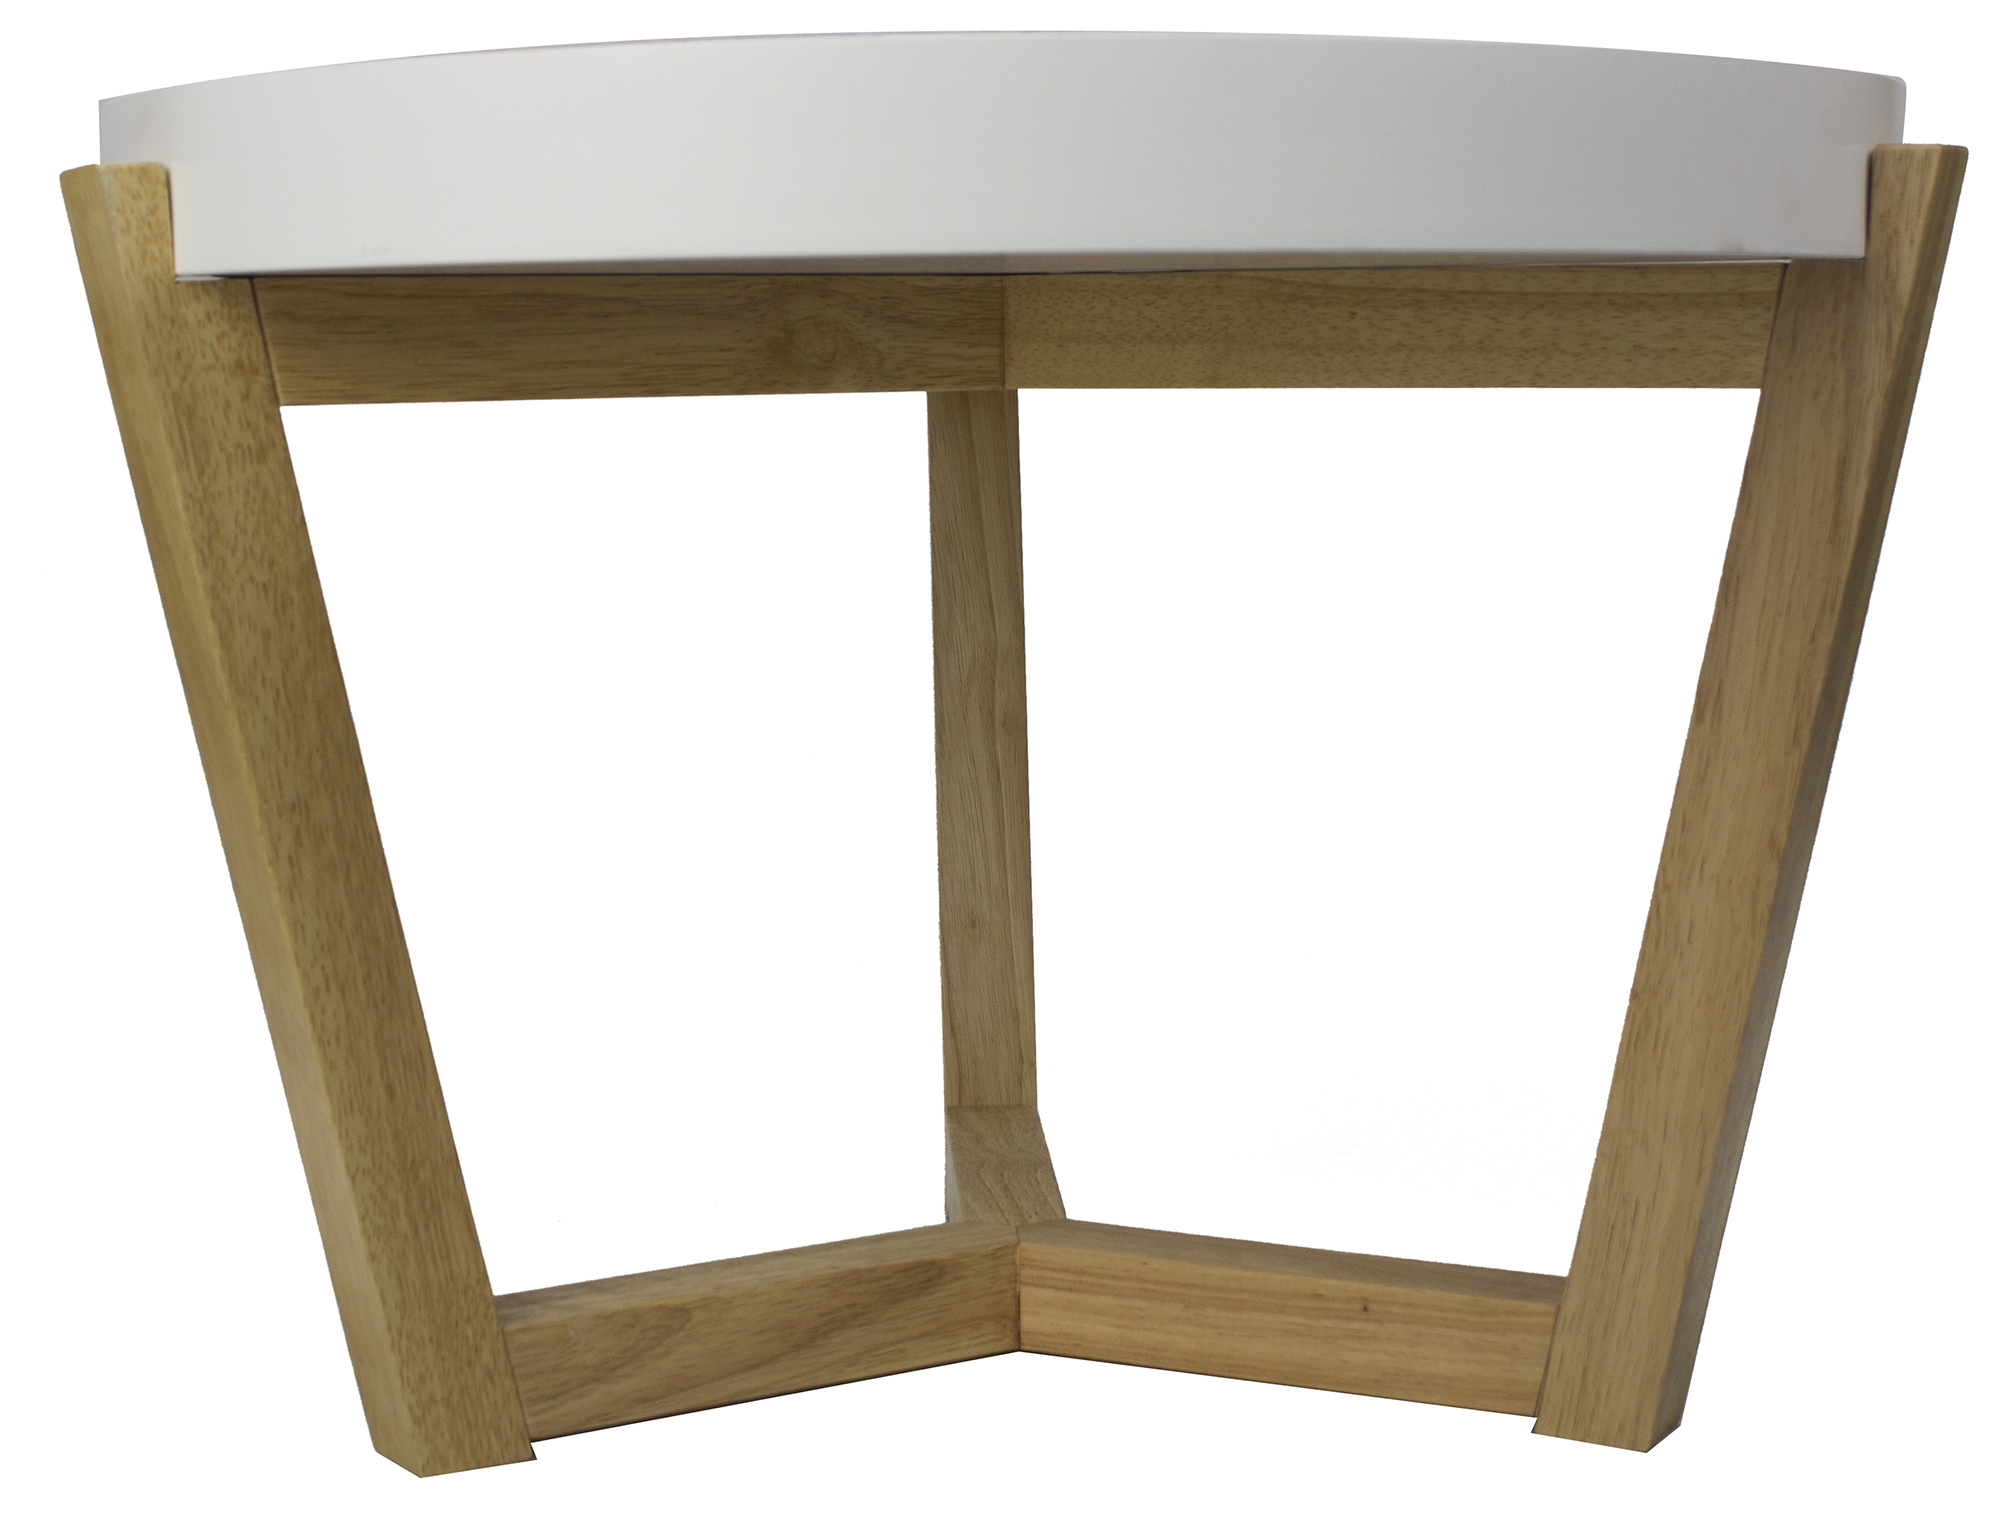 22" X 22" X 16" White MDF Wood Coffee Table